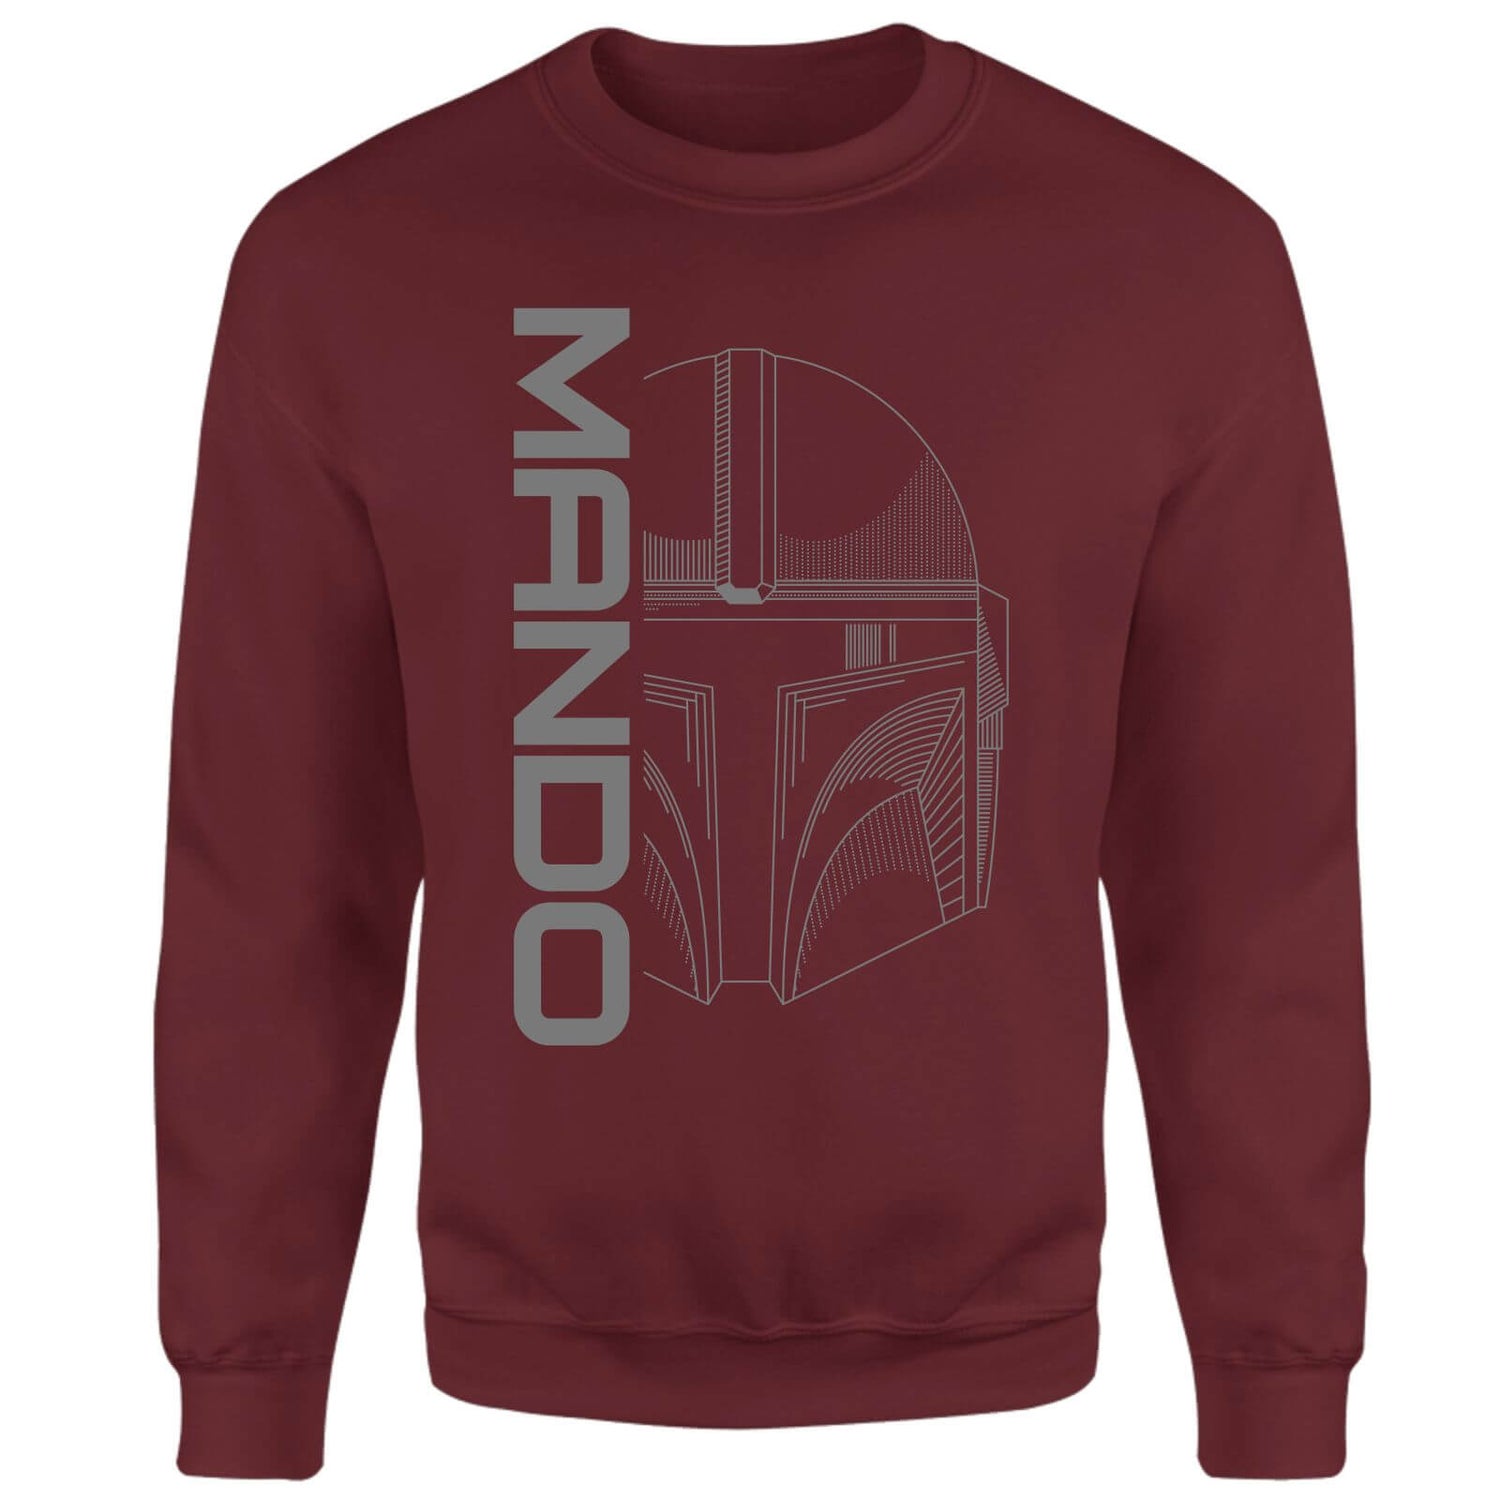 Star Wars The Mandalorian Mando Sweatshirt - Burgundy